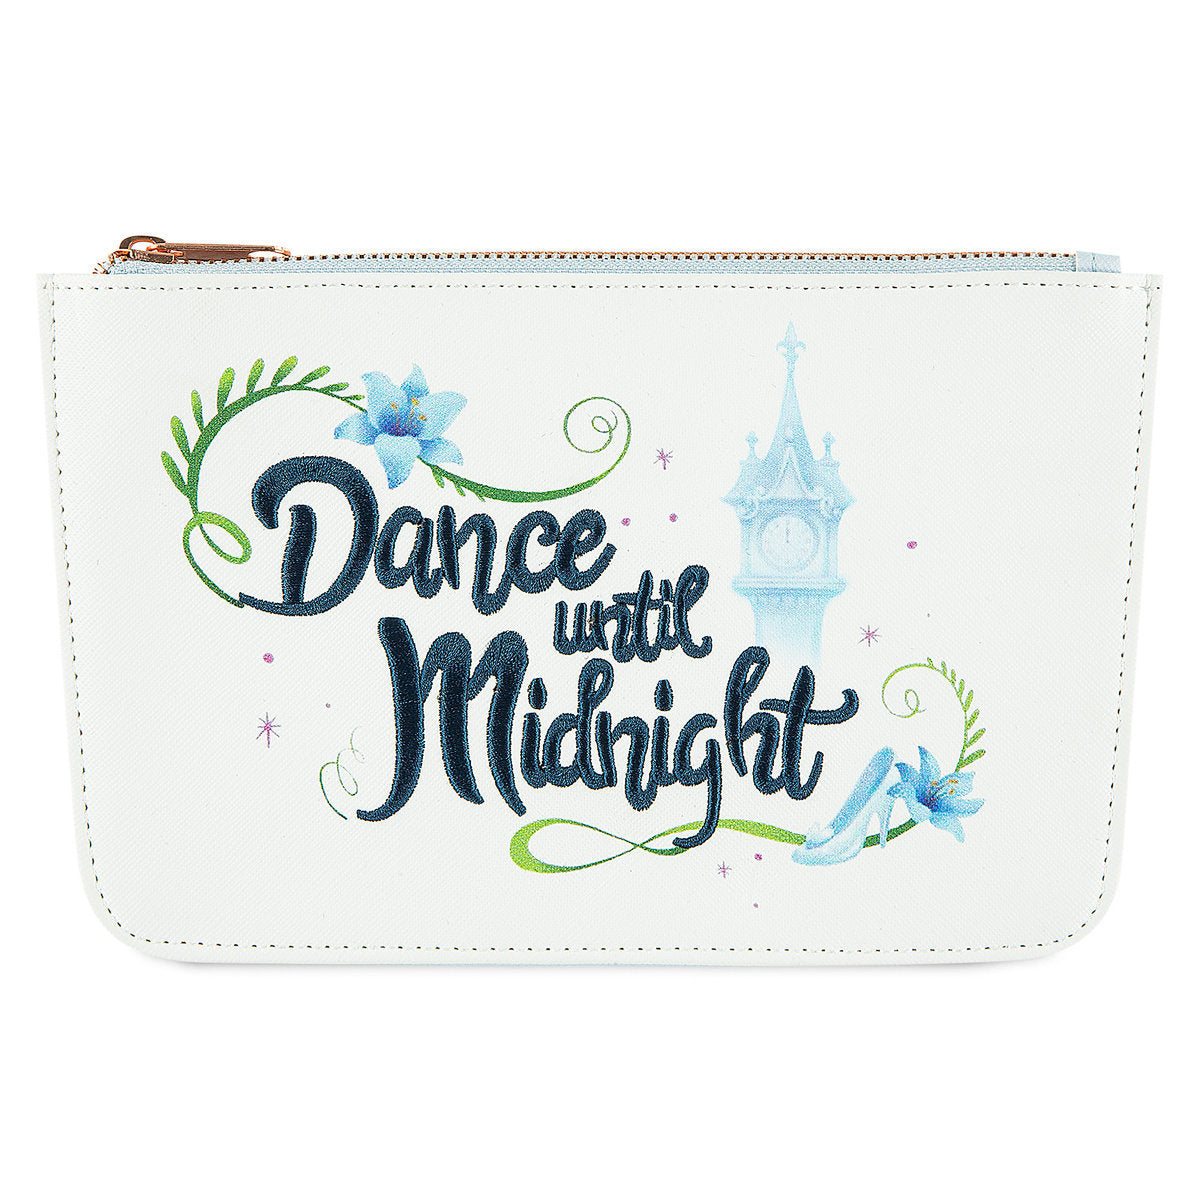 Disney Princess Mystique Cinderella Crossbody Bag and Purse Set New with Tags